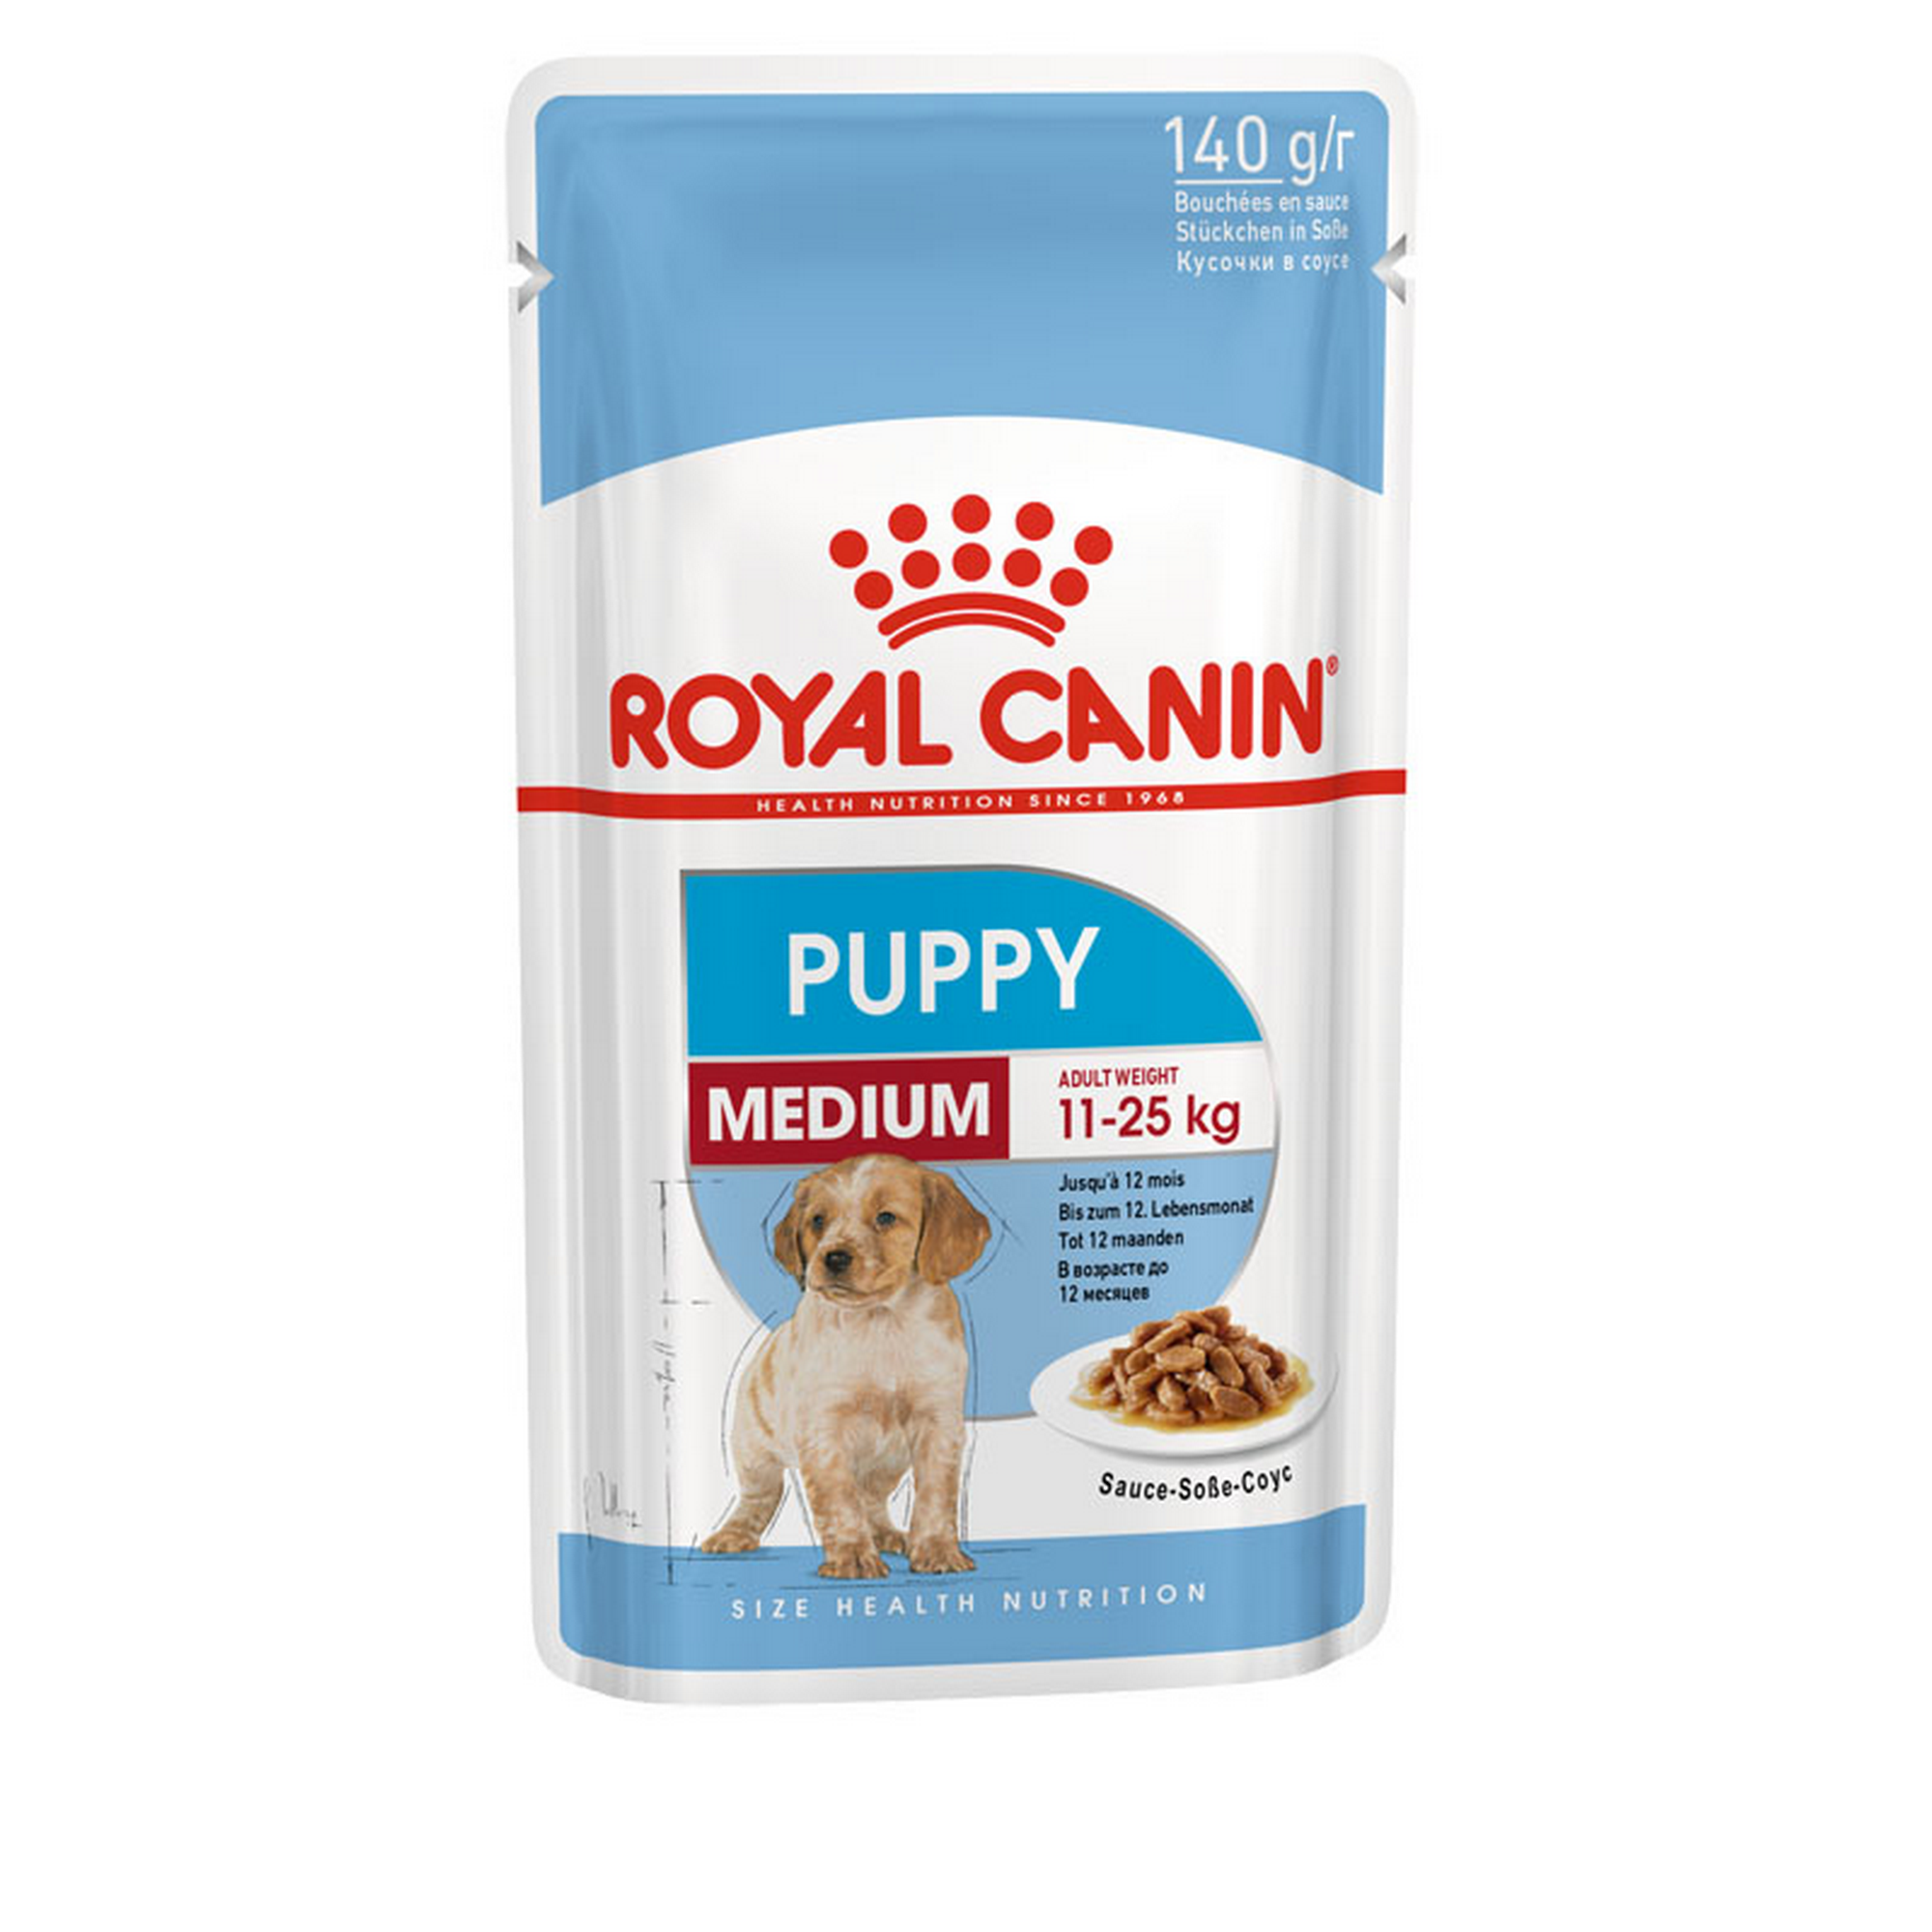 ROYAL CANIN MEDIUM PUPPY Welpenfutter nass für mittelgroße Hunde + product picture